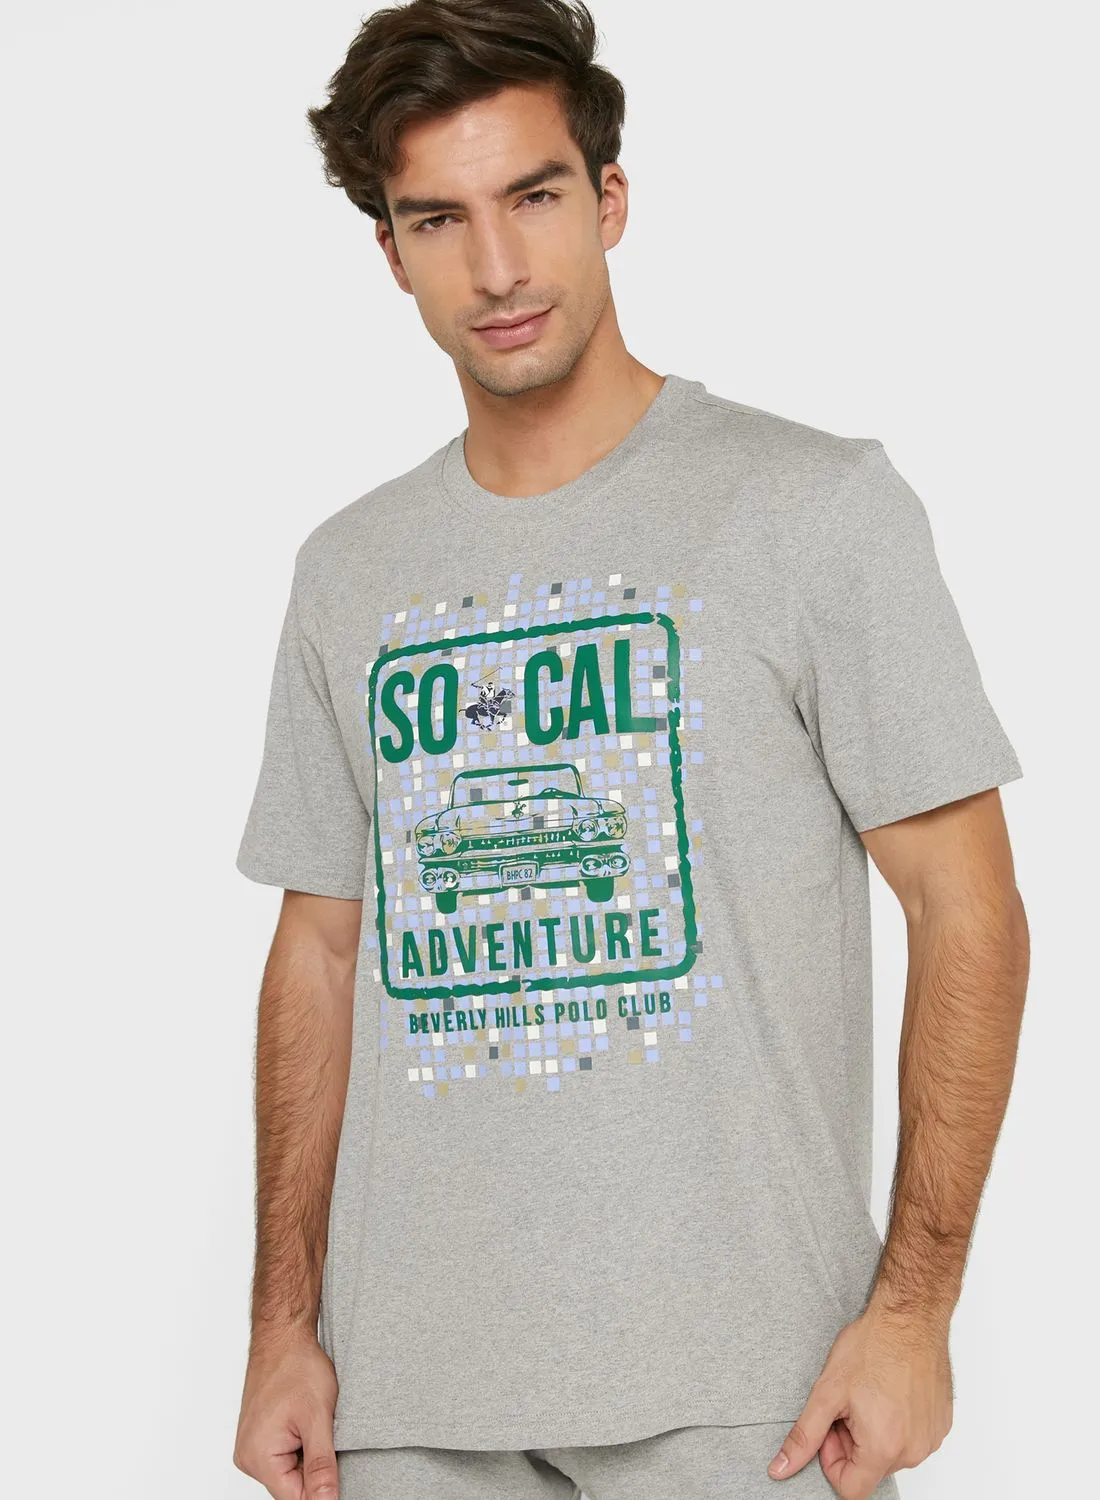 bhpoloclub Social Adventure Crew Neck T-Shirt